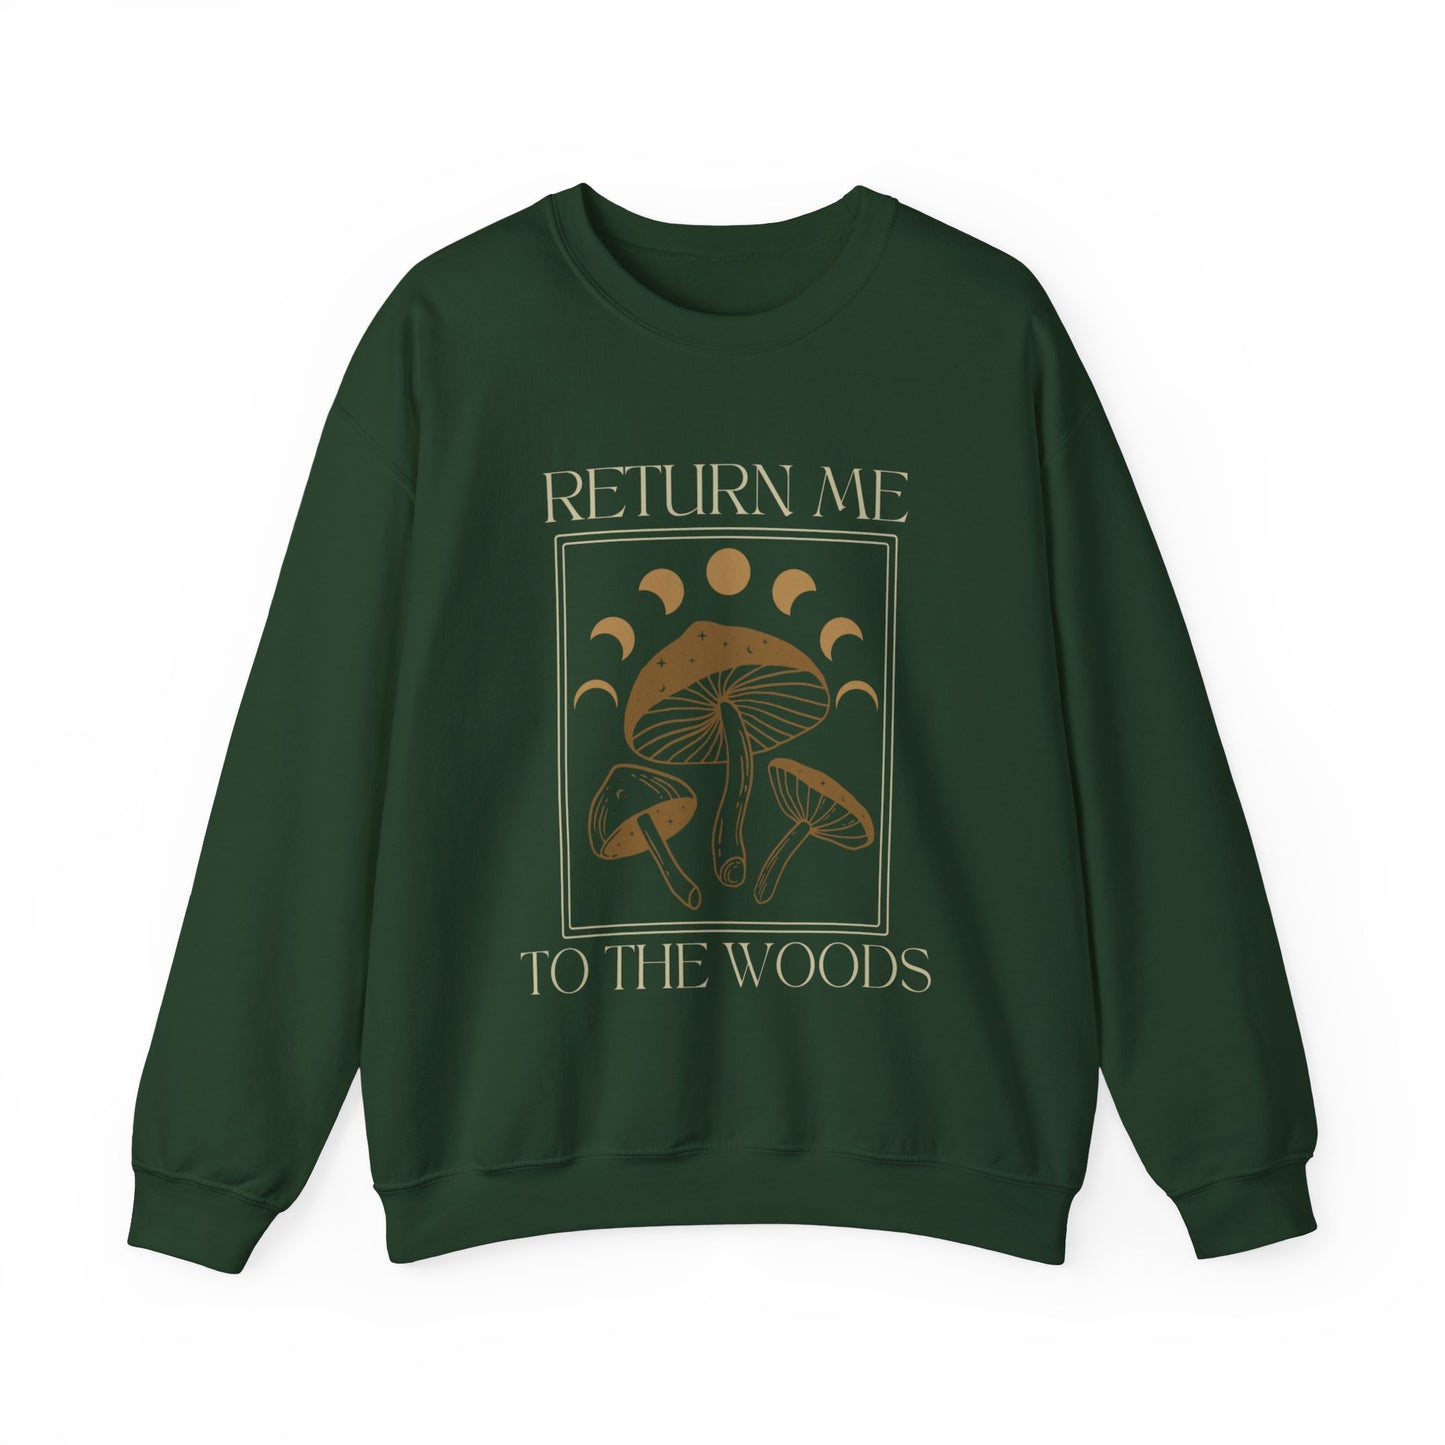 To the Woods Crewneck Sweatshirt